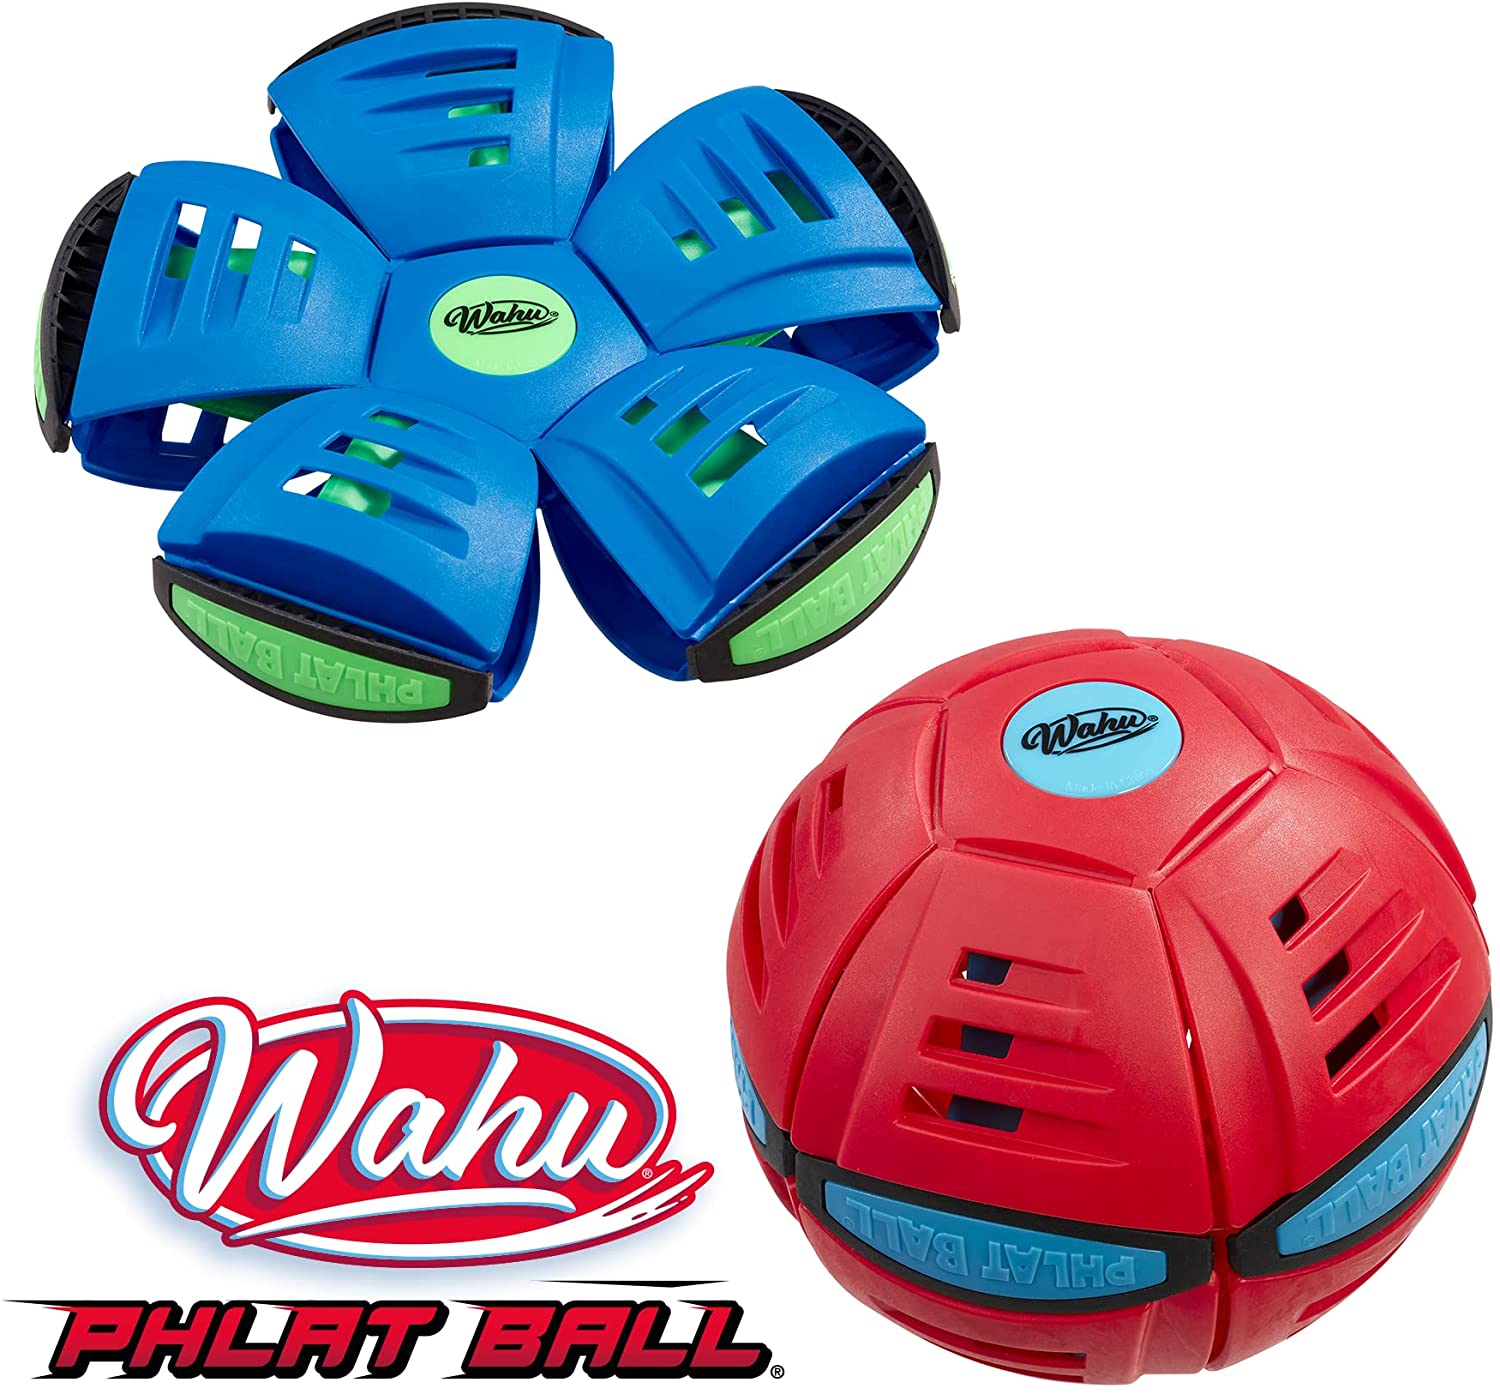 Goliath Wahu Phlat Ball Flash